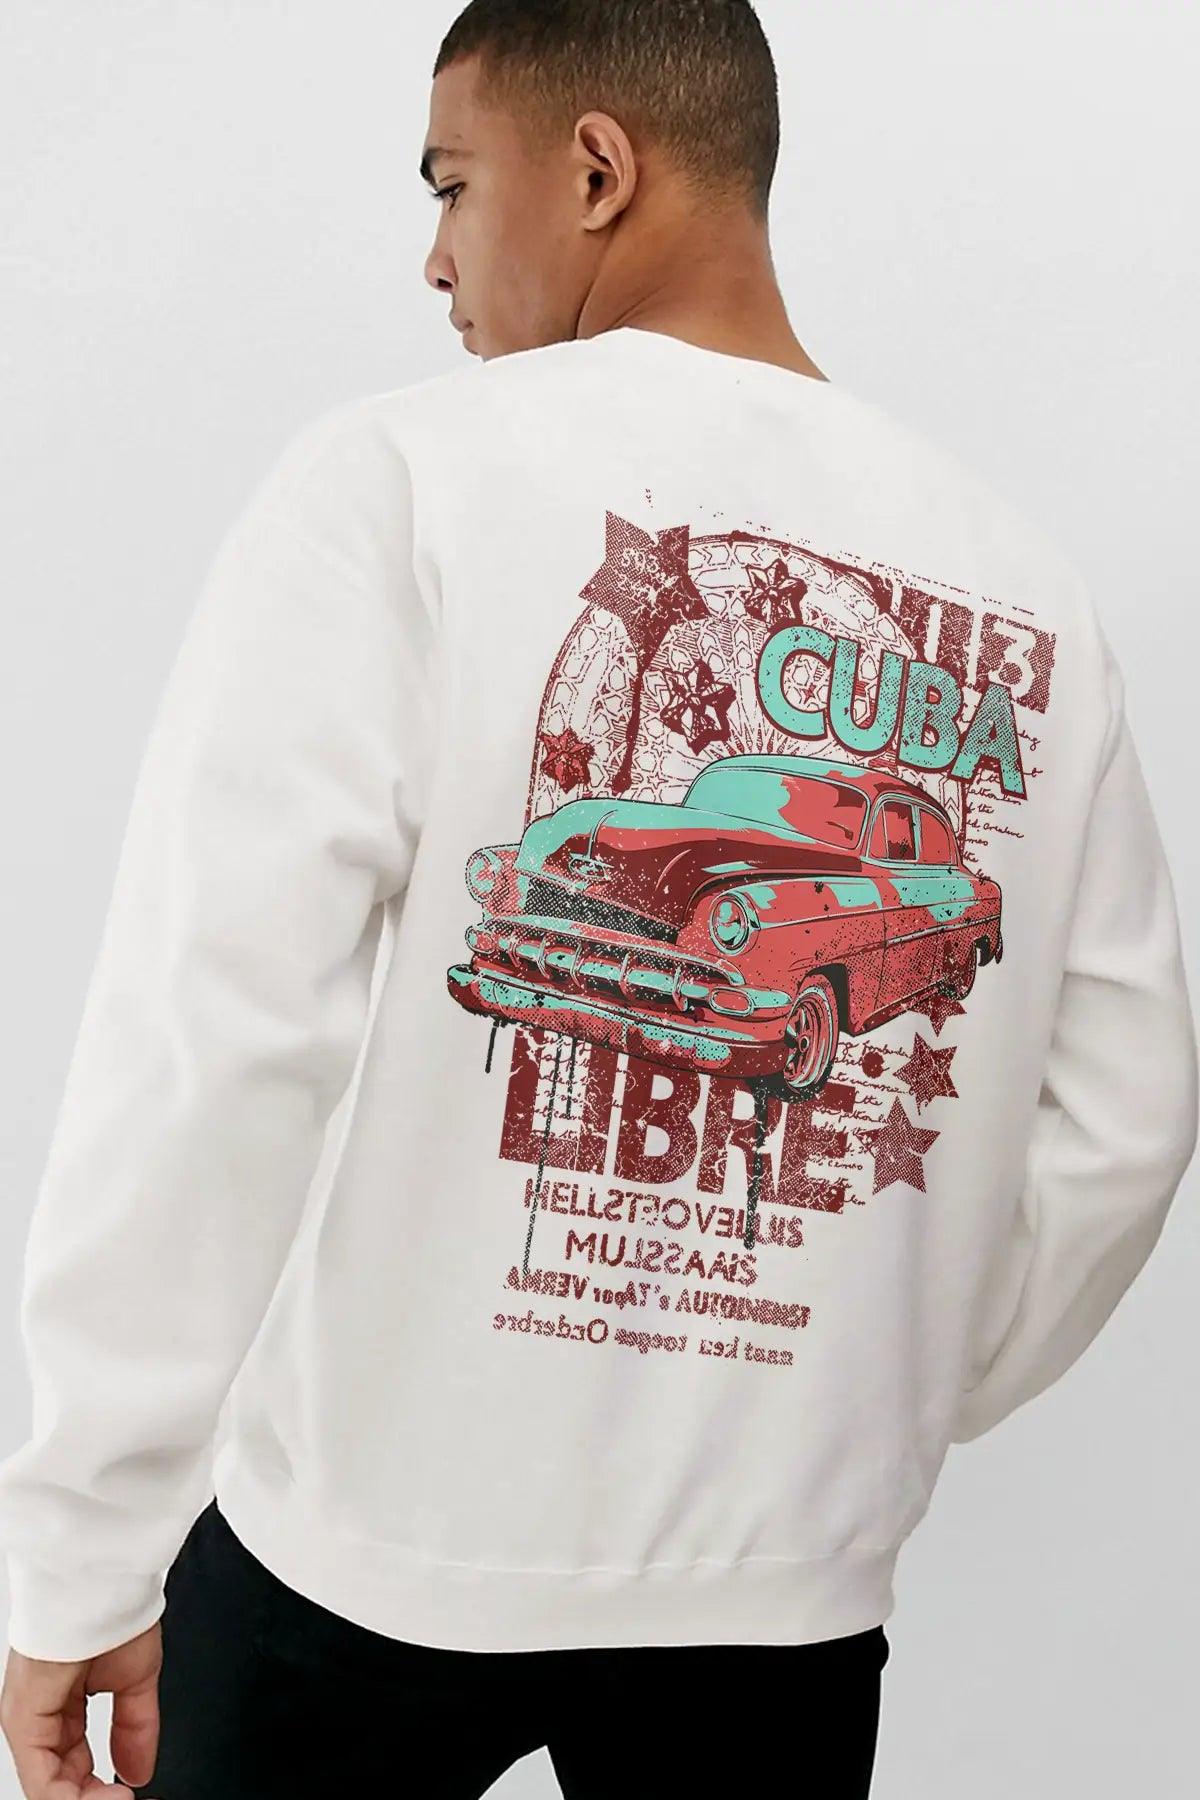 Cuba Oversize Erkek Sweatshirt - PΛSΛGE